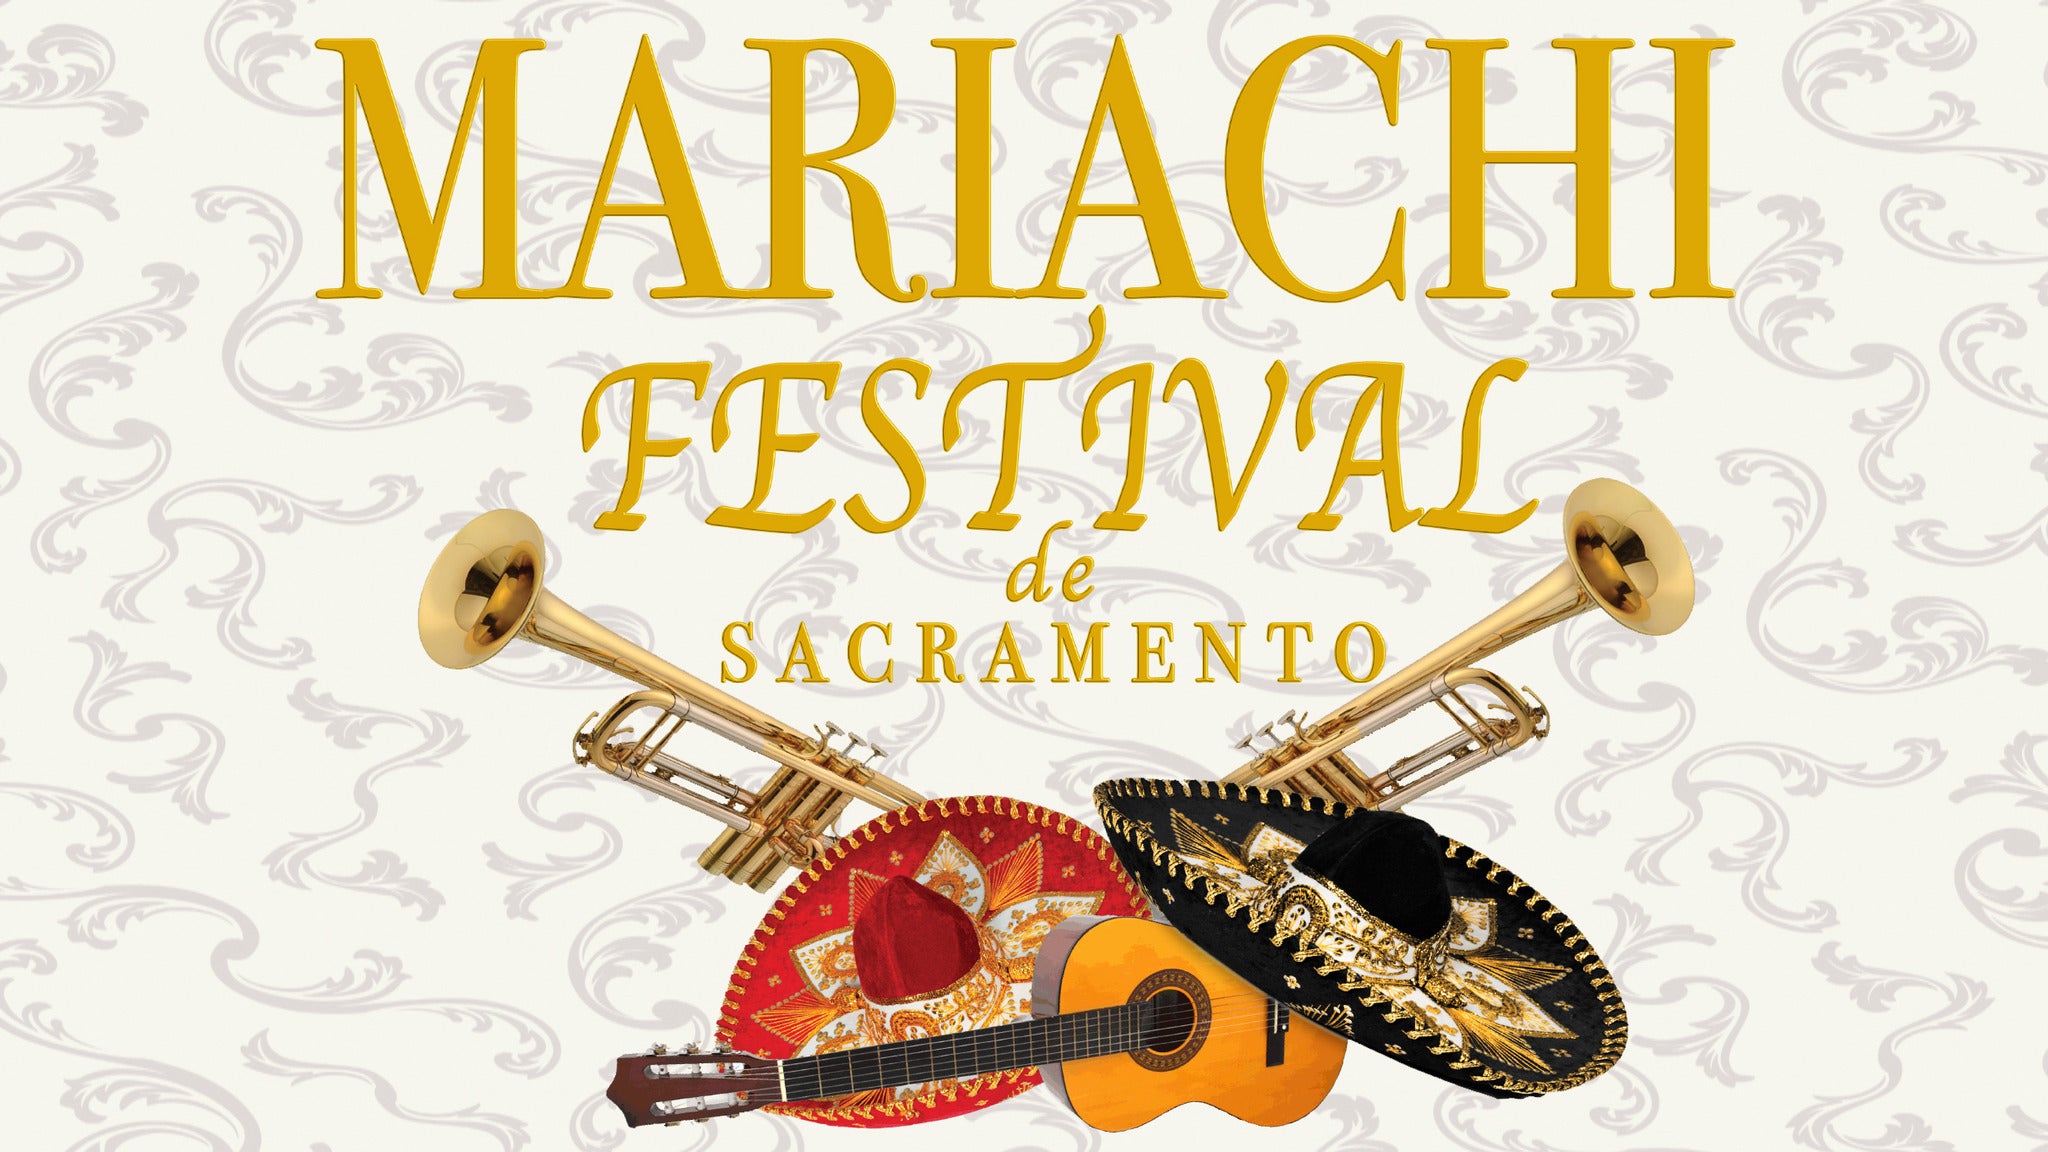 Mariachi Festival de Sacramento Tickets, 20222023 Concert Tour Dates